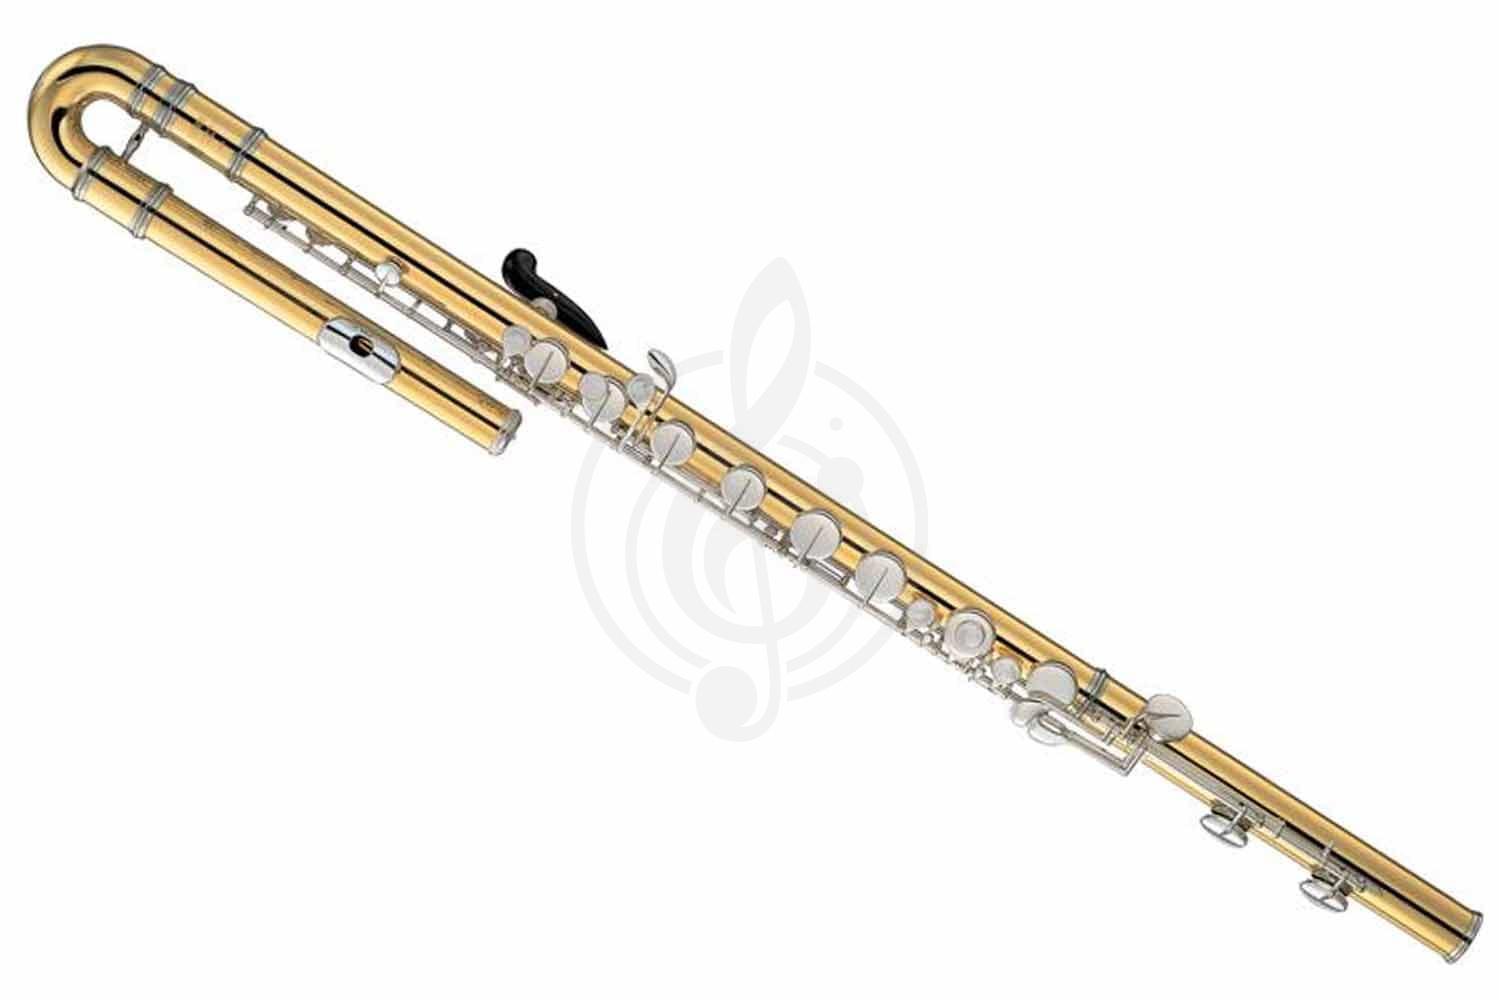 Басовая флейта Басовые флейты Yamaha Yamaha YFL-B441 - Басовая флейта YFL-B441//02 - фото 1